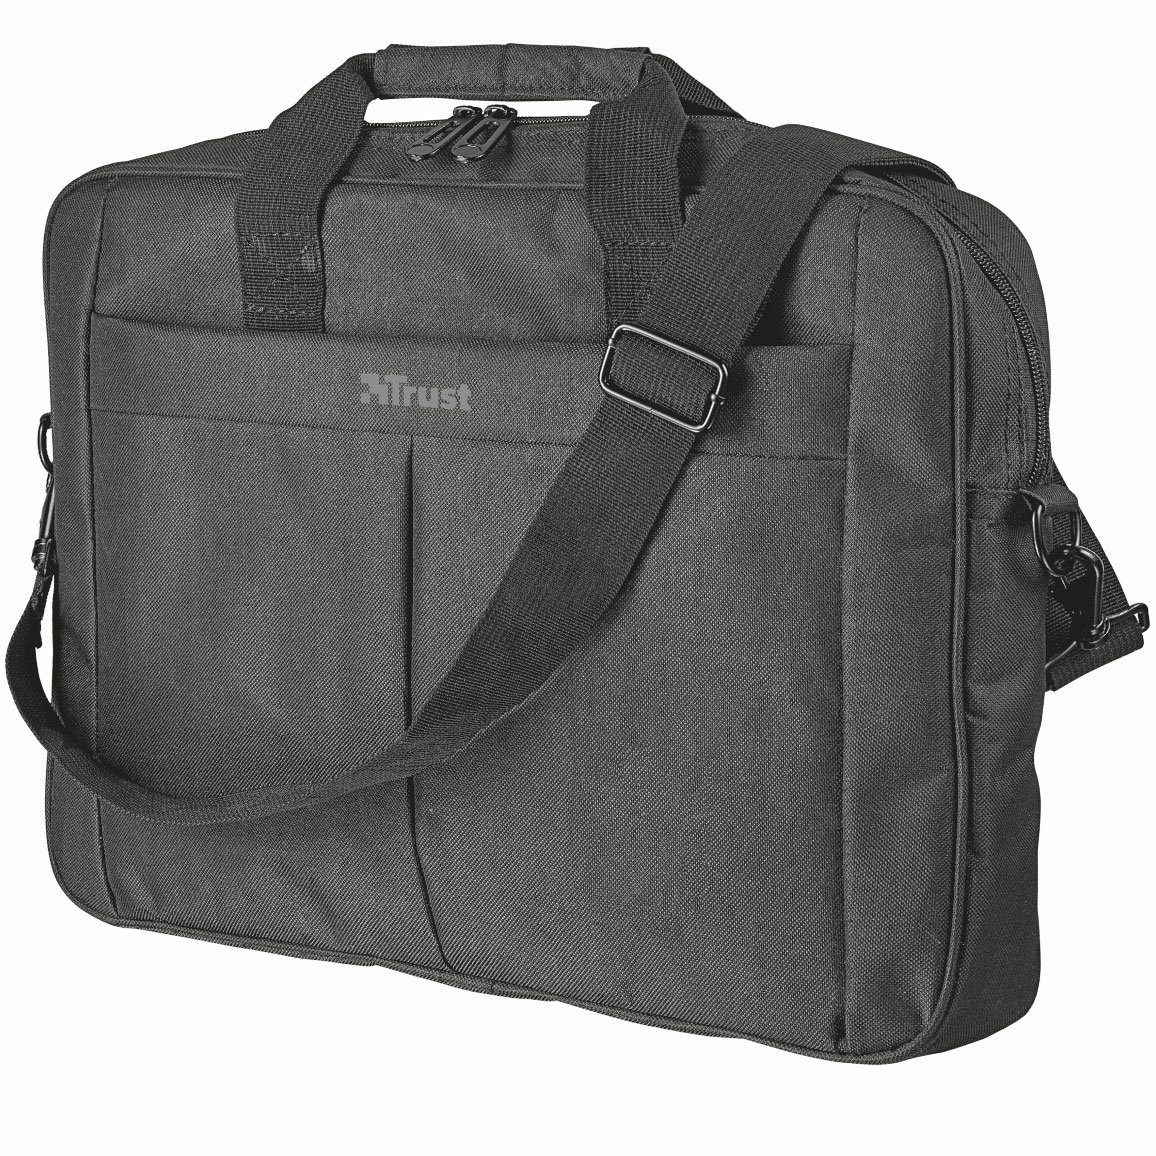 Trust Primo Carry Bag laptops 16